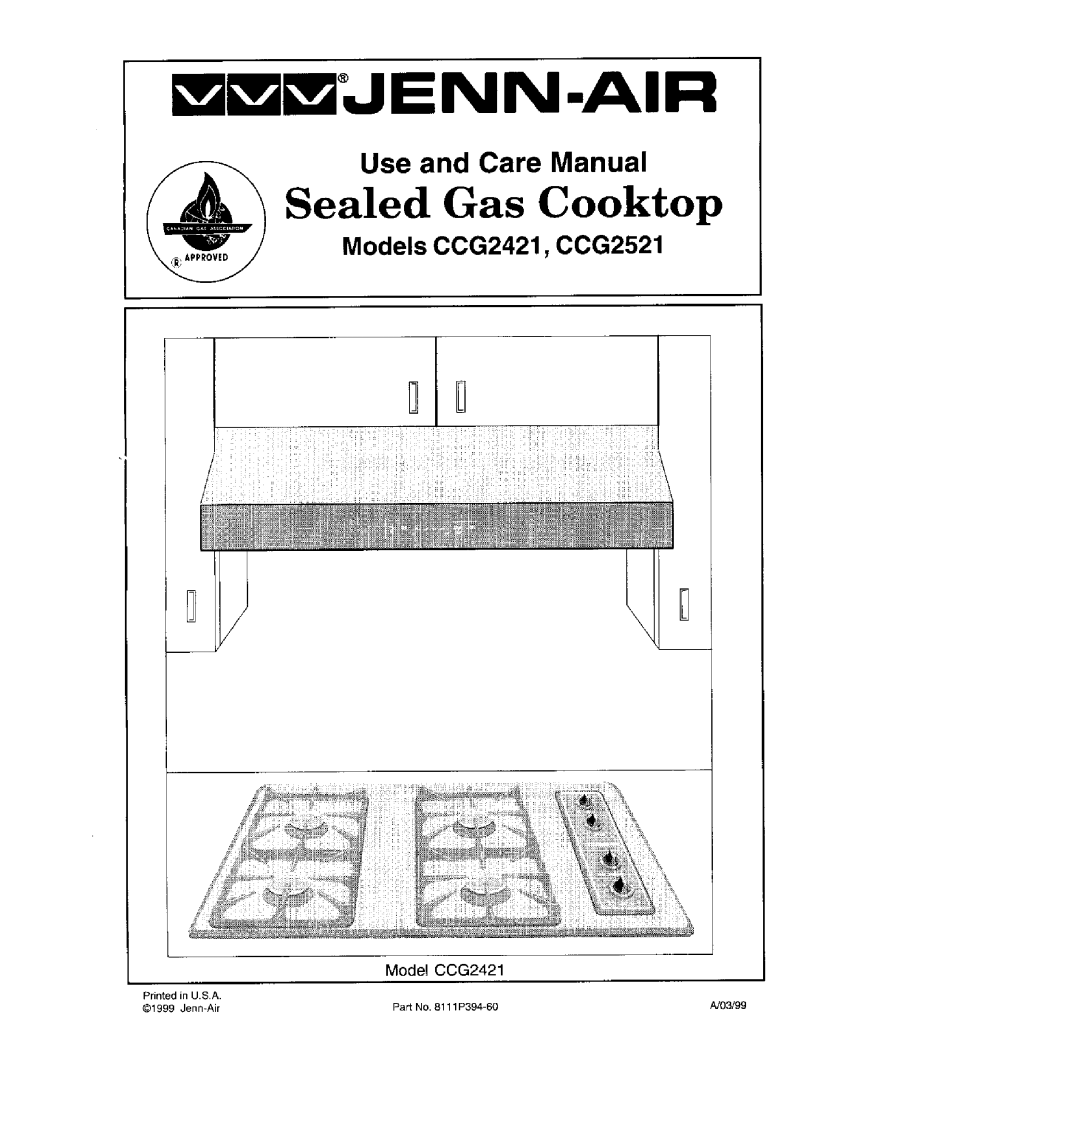 Jenn-Air manual Models CCG2421, CCG2521, Nn-Air, Sealed Gas Cooktop, Use and Care Manual, Printed in U.S.A, AJ03/99 